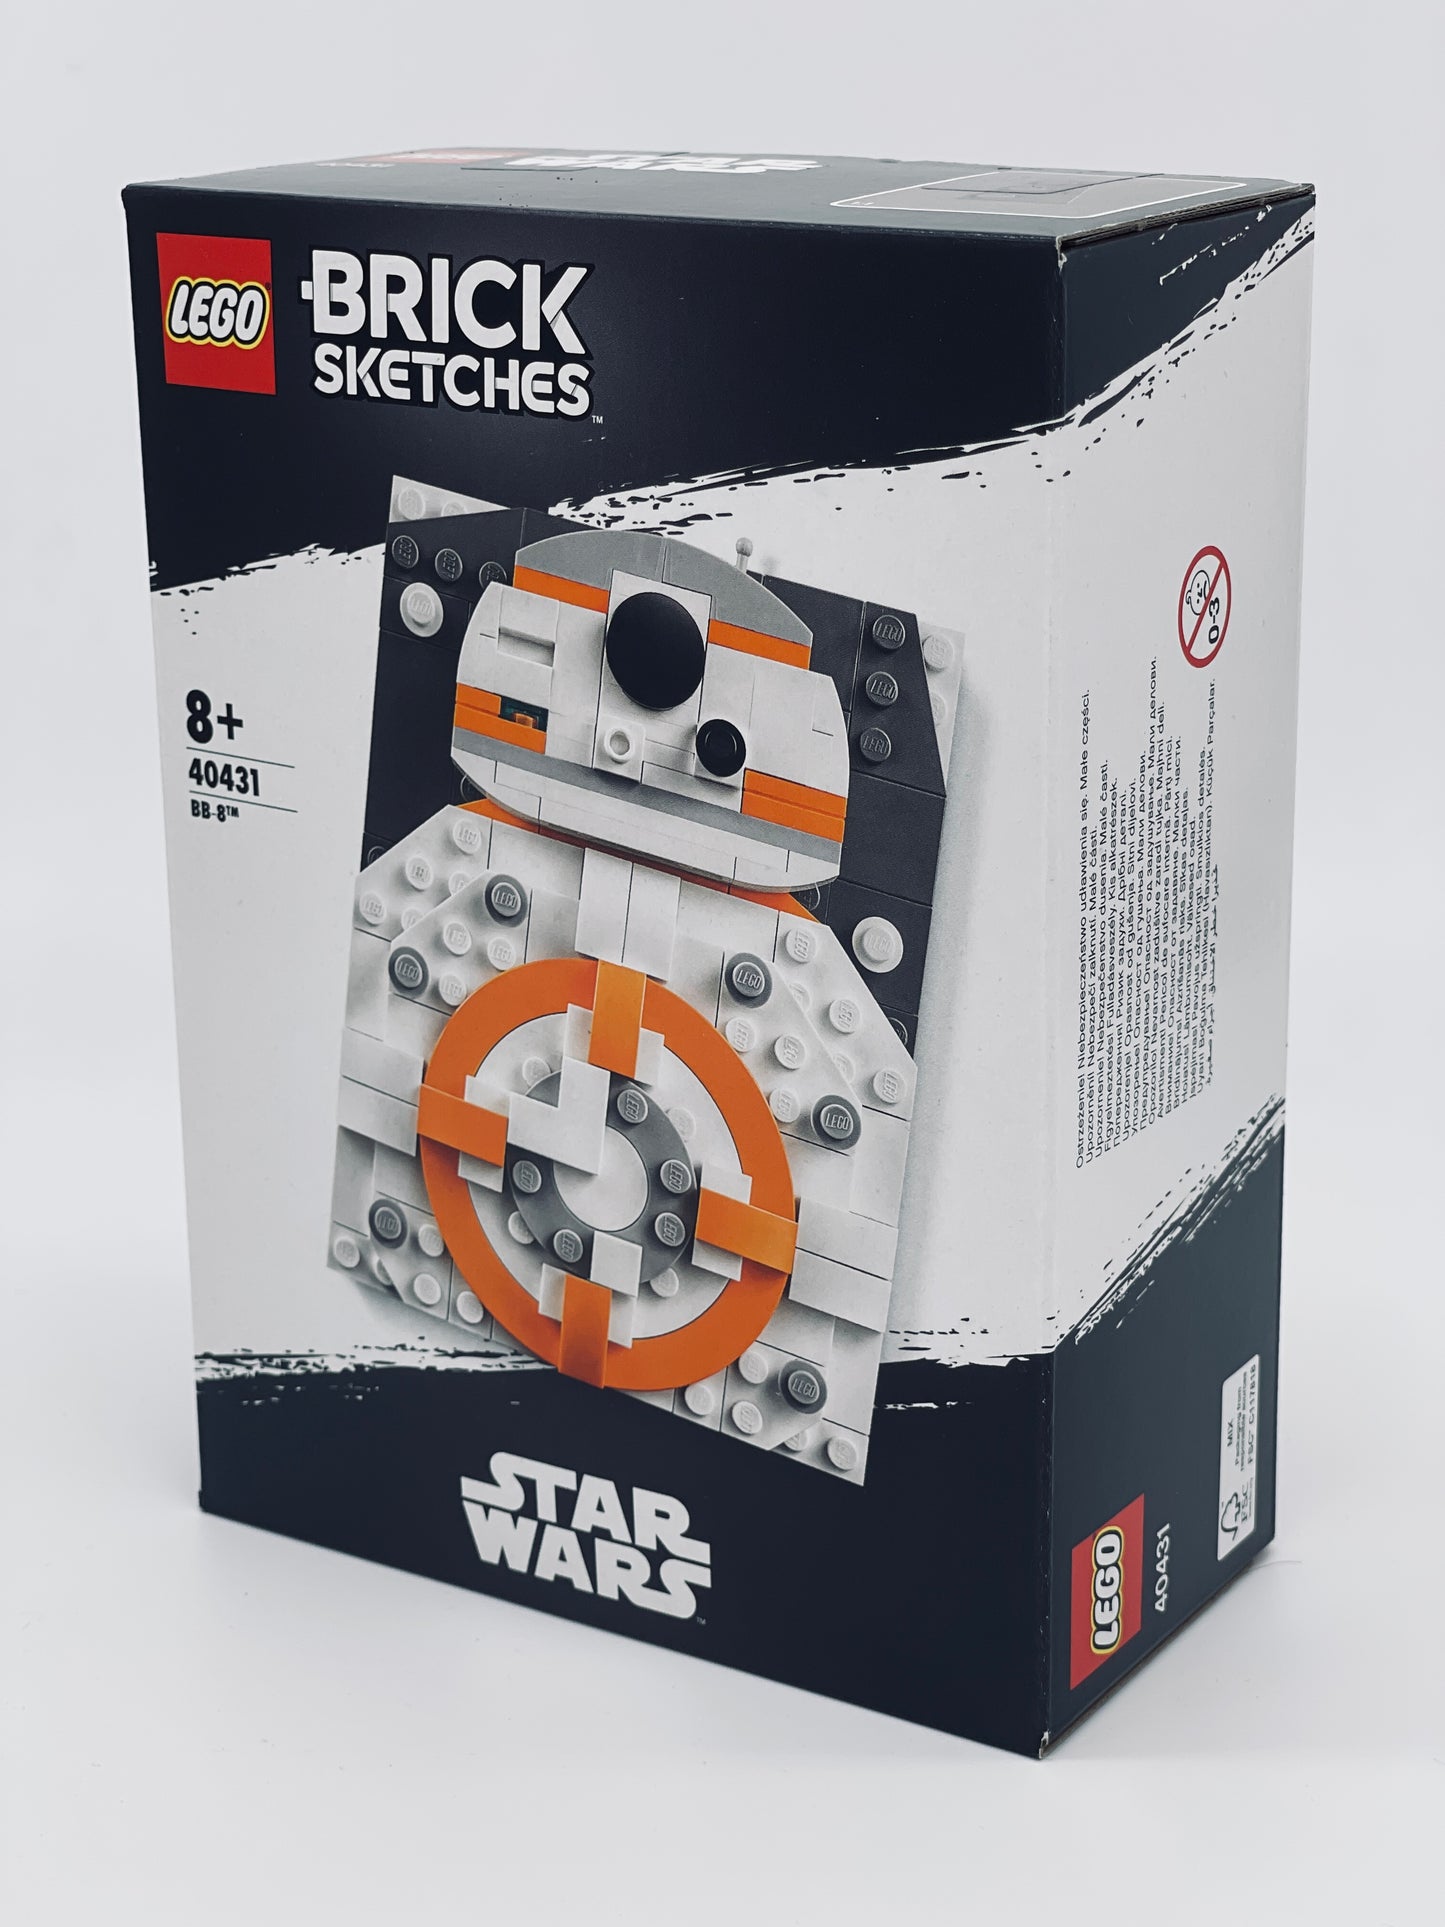 Lego 40431 Star Wars BB-8 Brick Sketches Disney (2020)